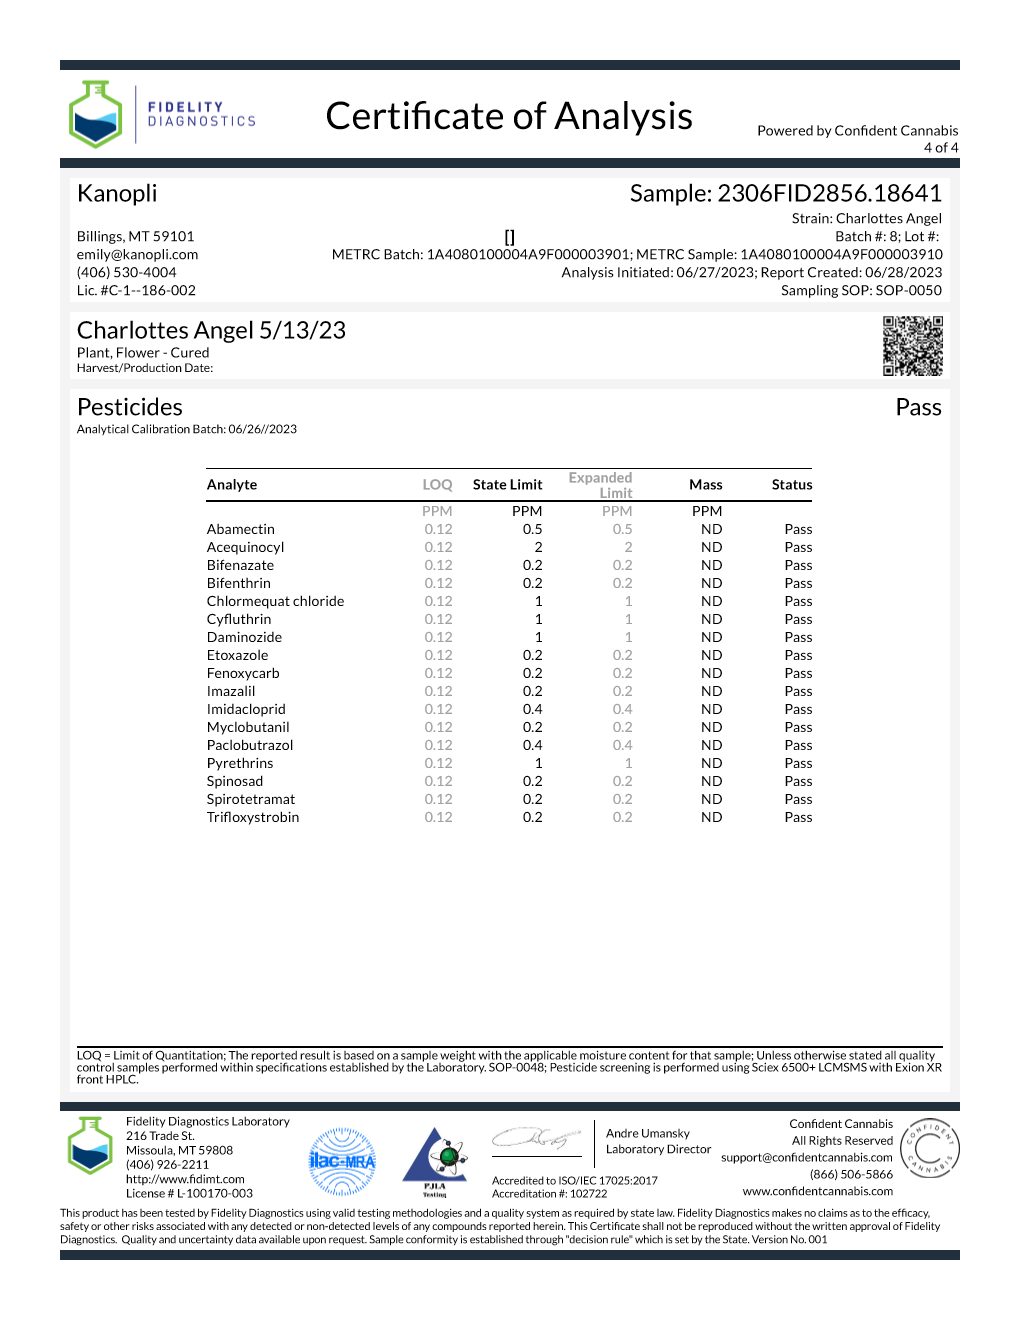 Charlotte's Angel - High CBD 15% CBDa (May 2023) Pre-rolls (1 gram)